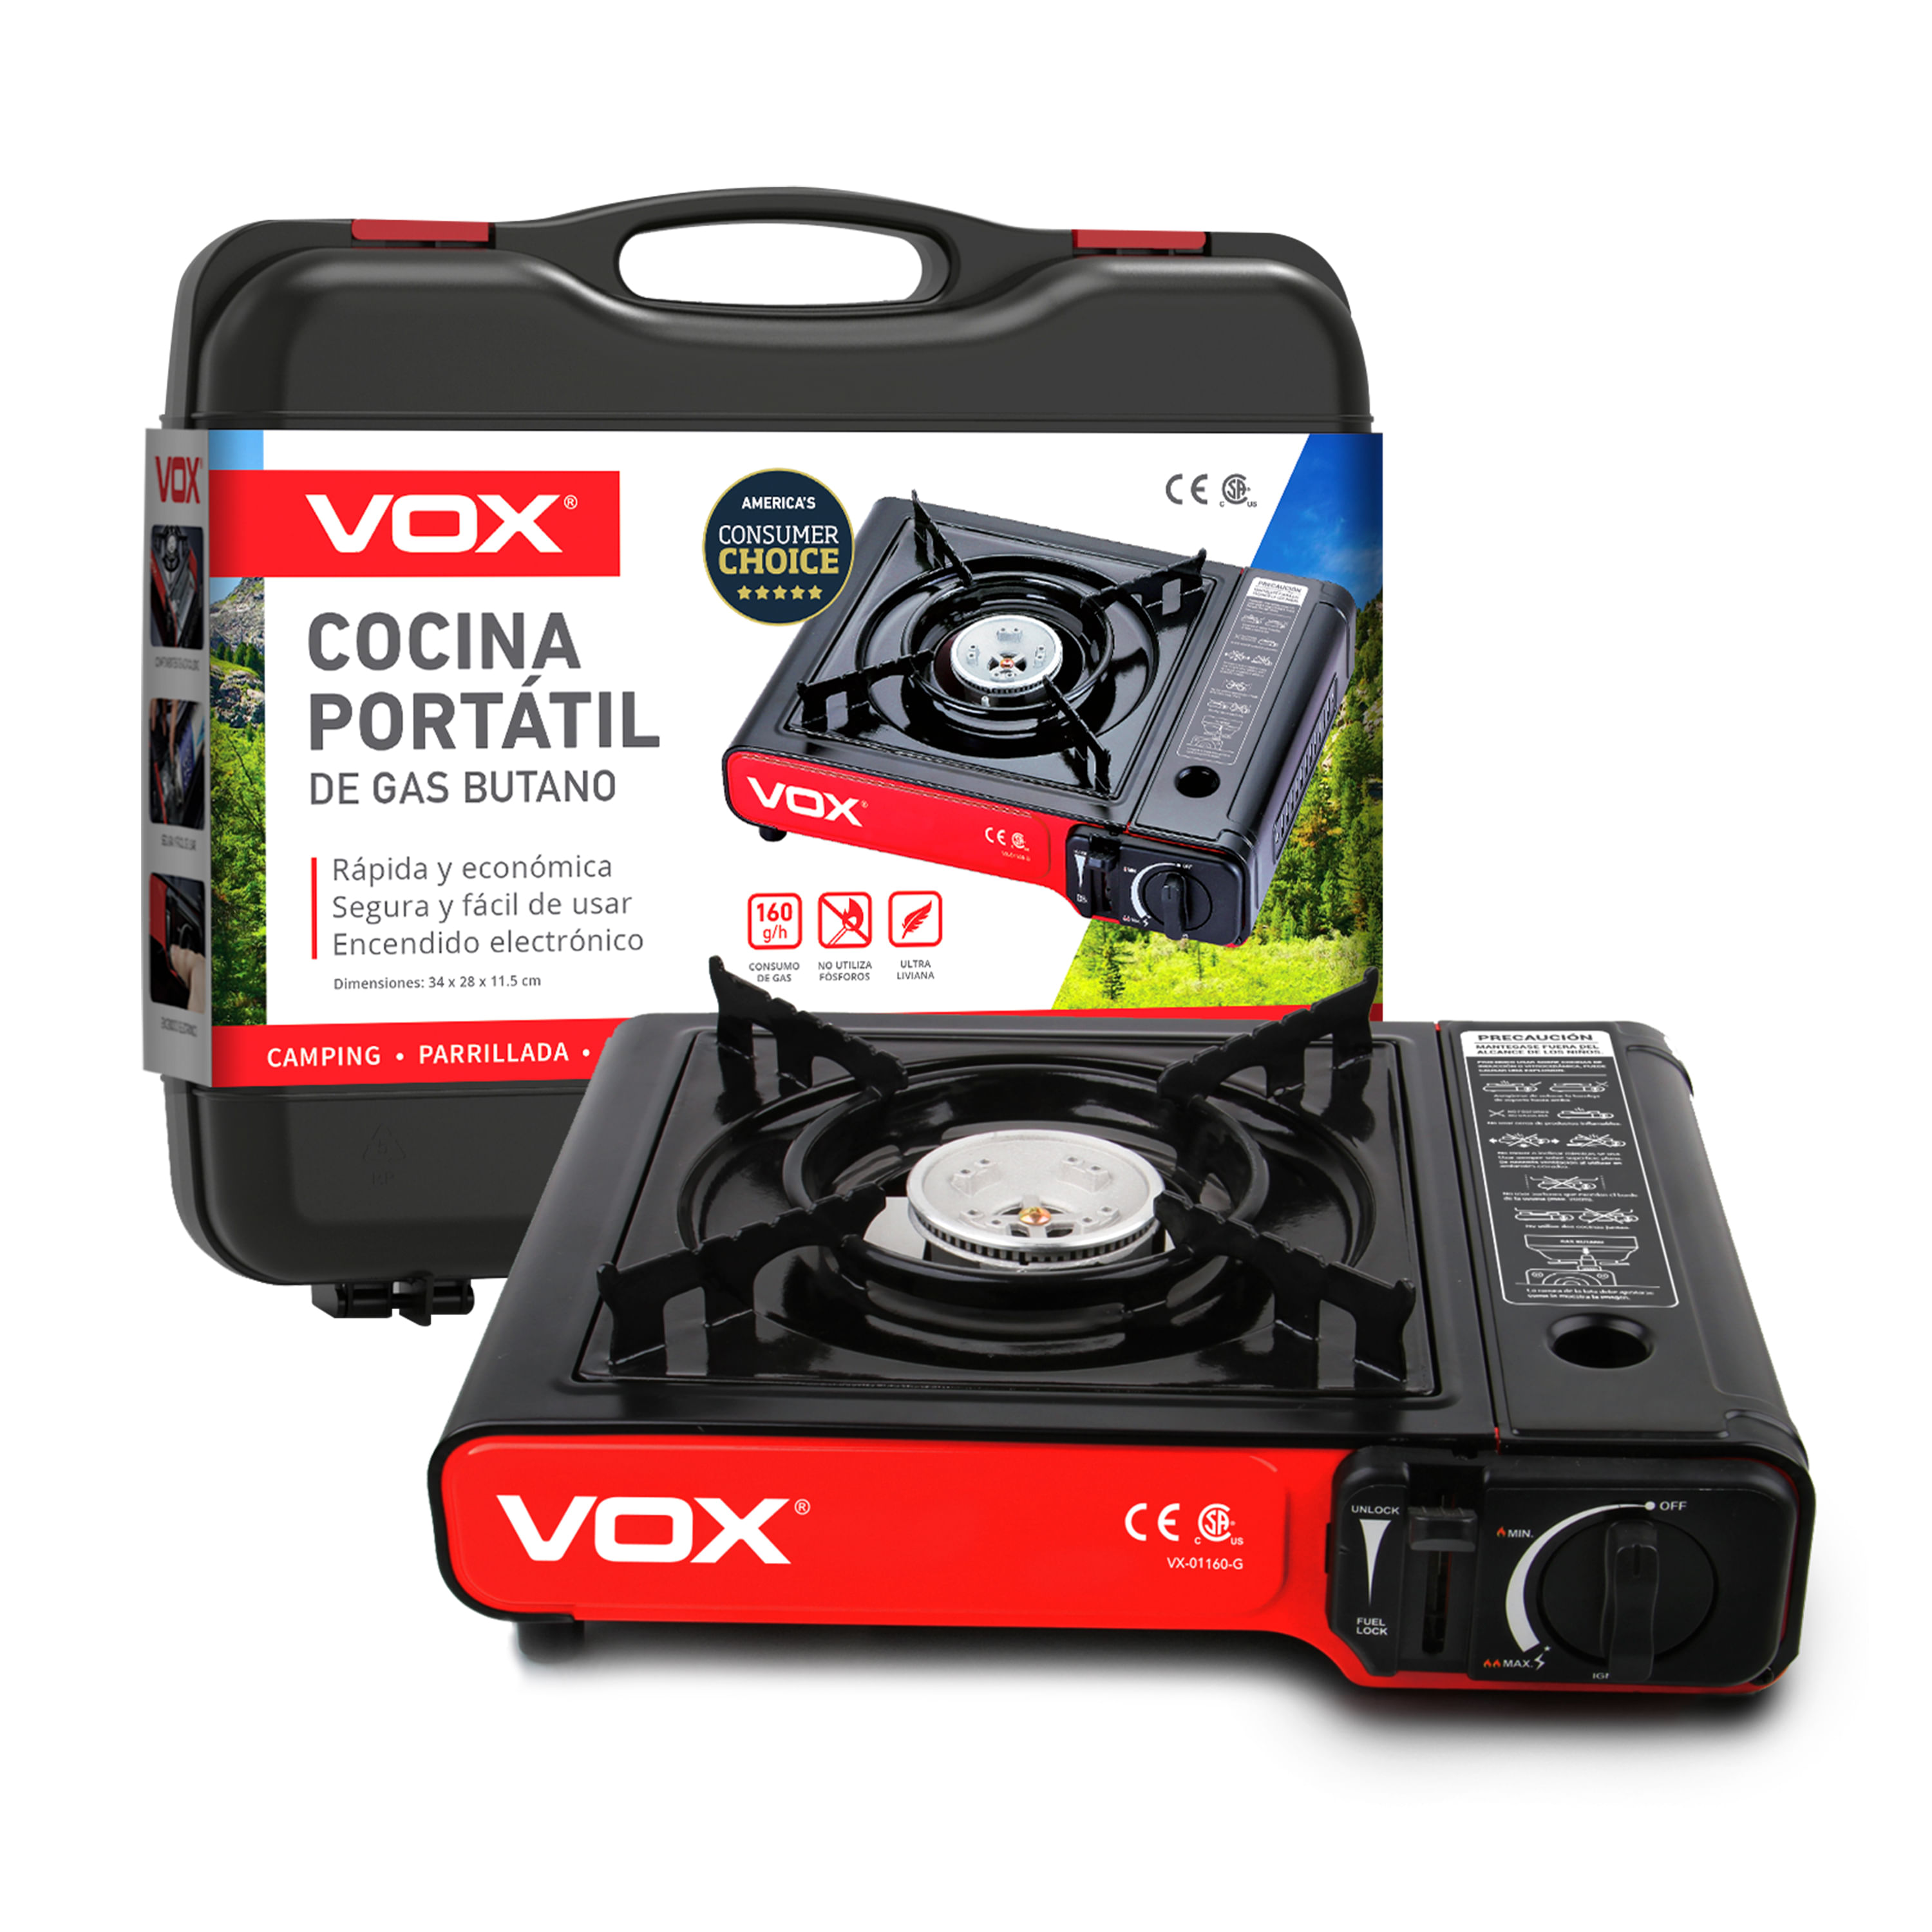 Comprar Cocina Vox Portatil Gas Butano con Encendido electrónico